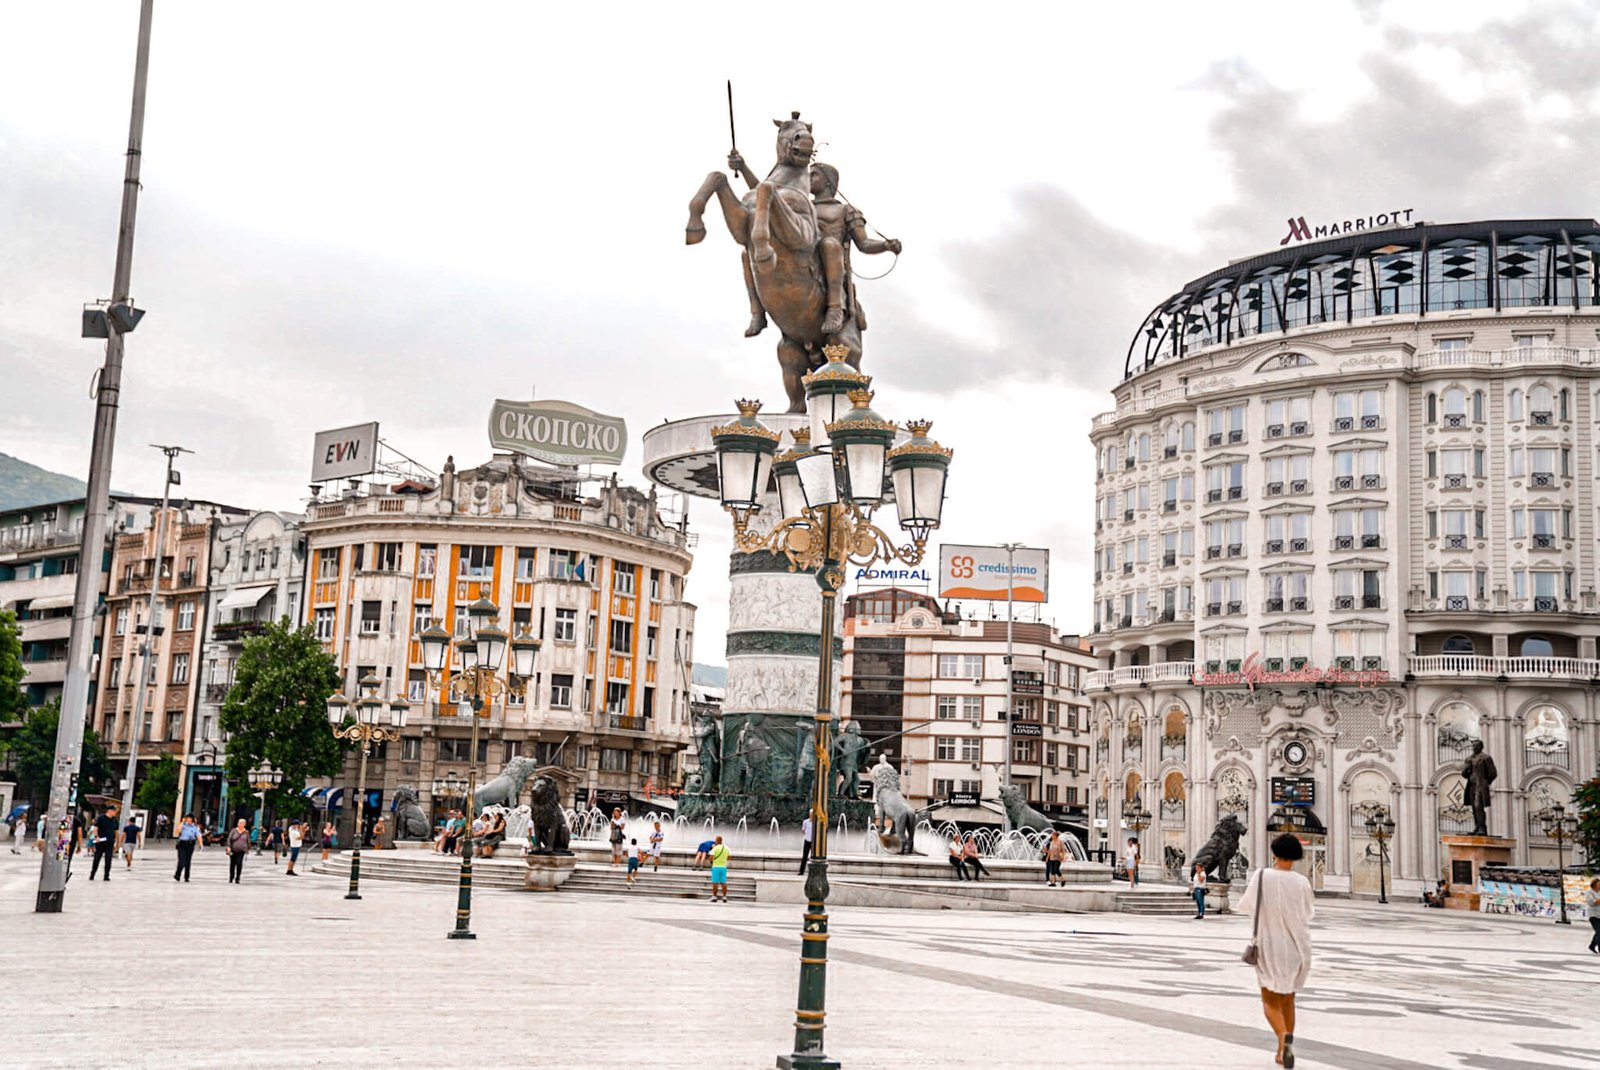 Macedonia Square, Skopje in Macedonia